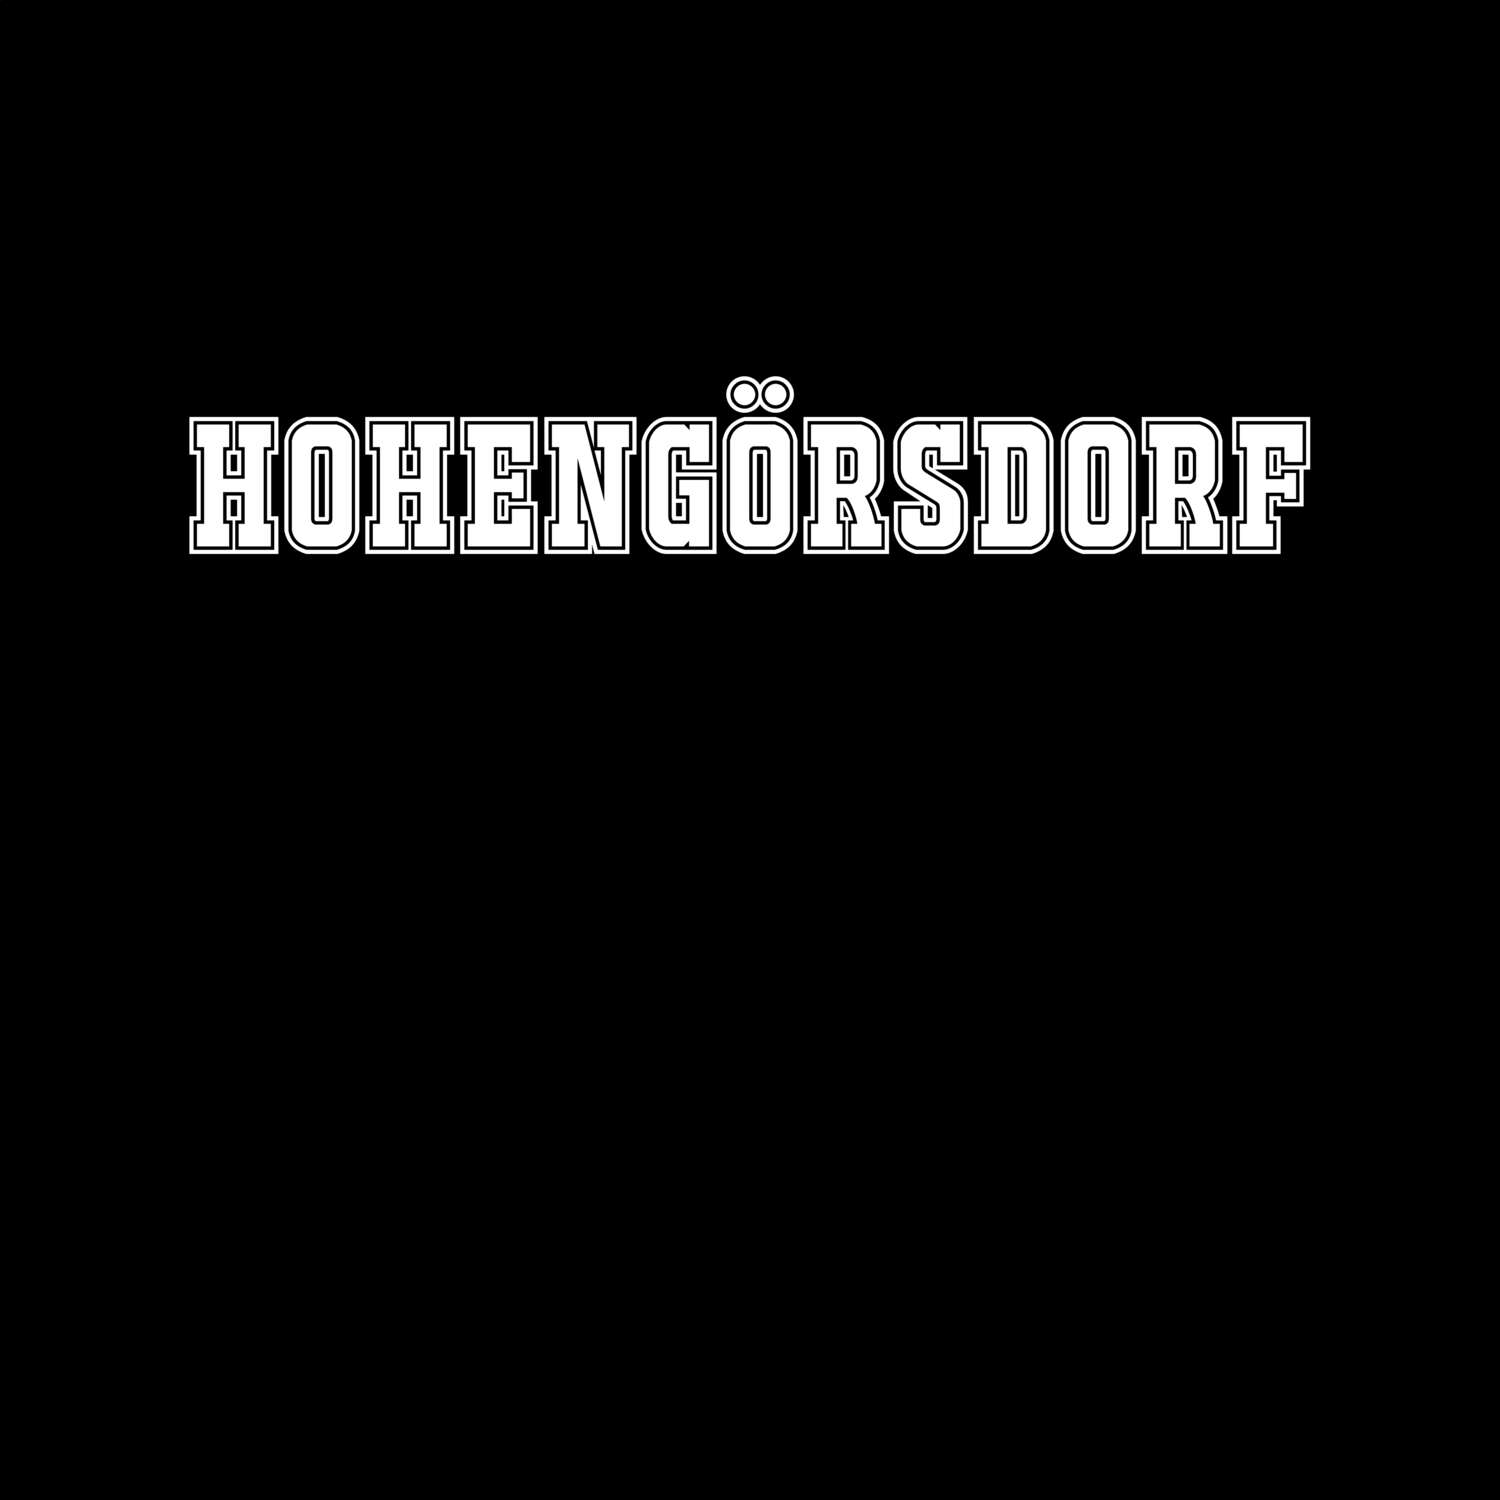 Hohengörsdorf T-Shirt »Classic«